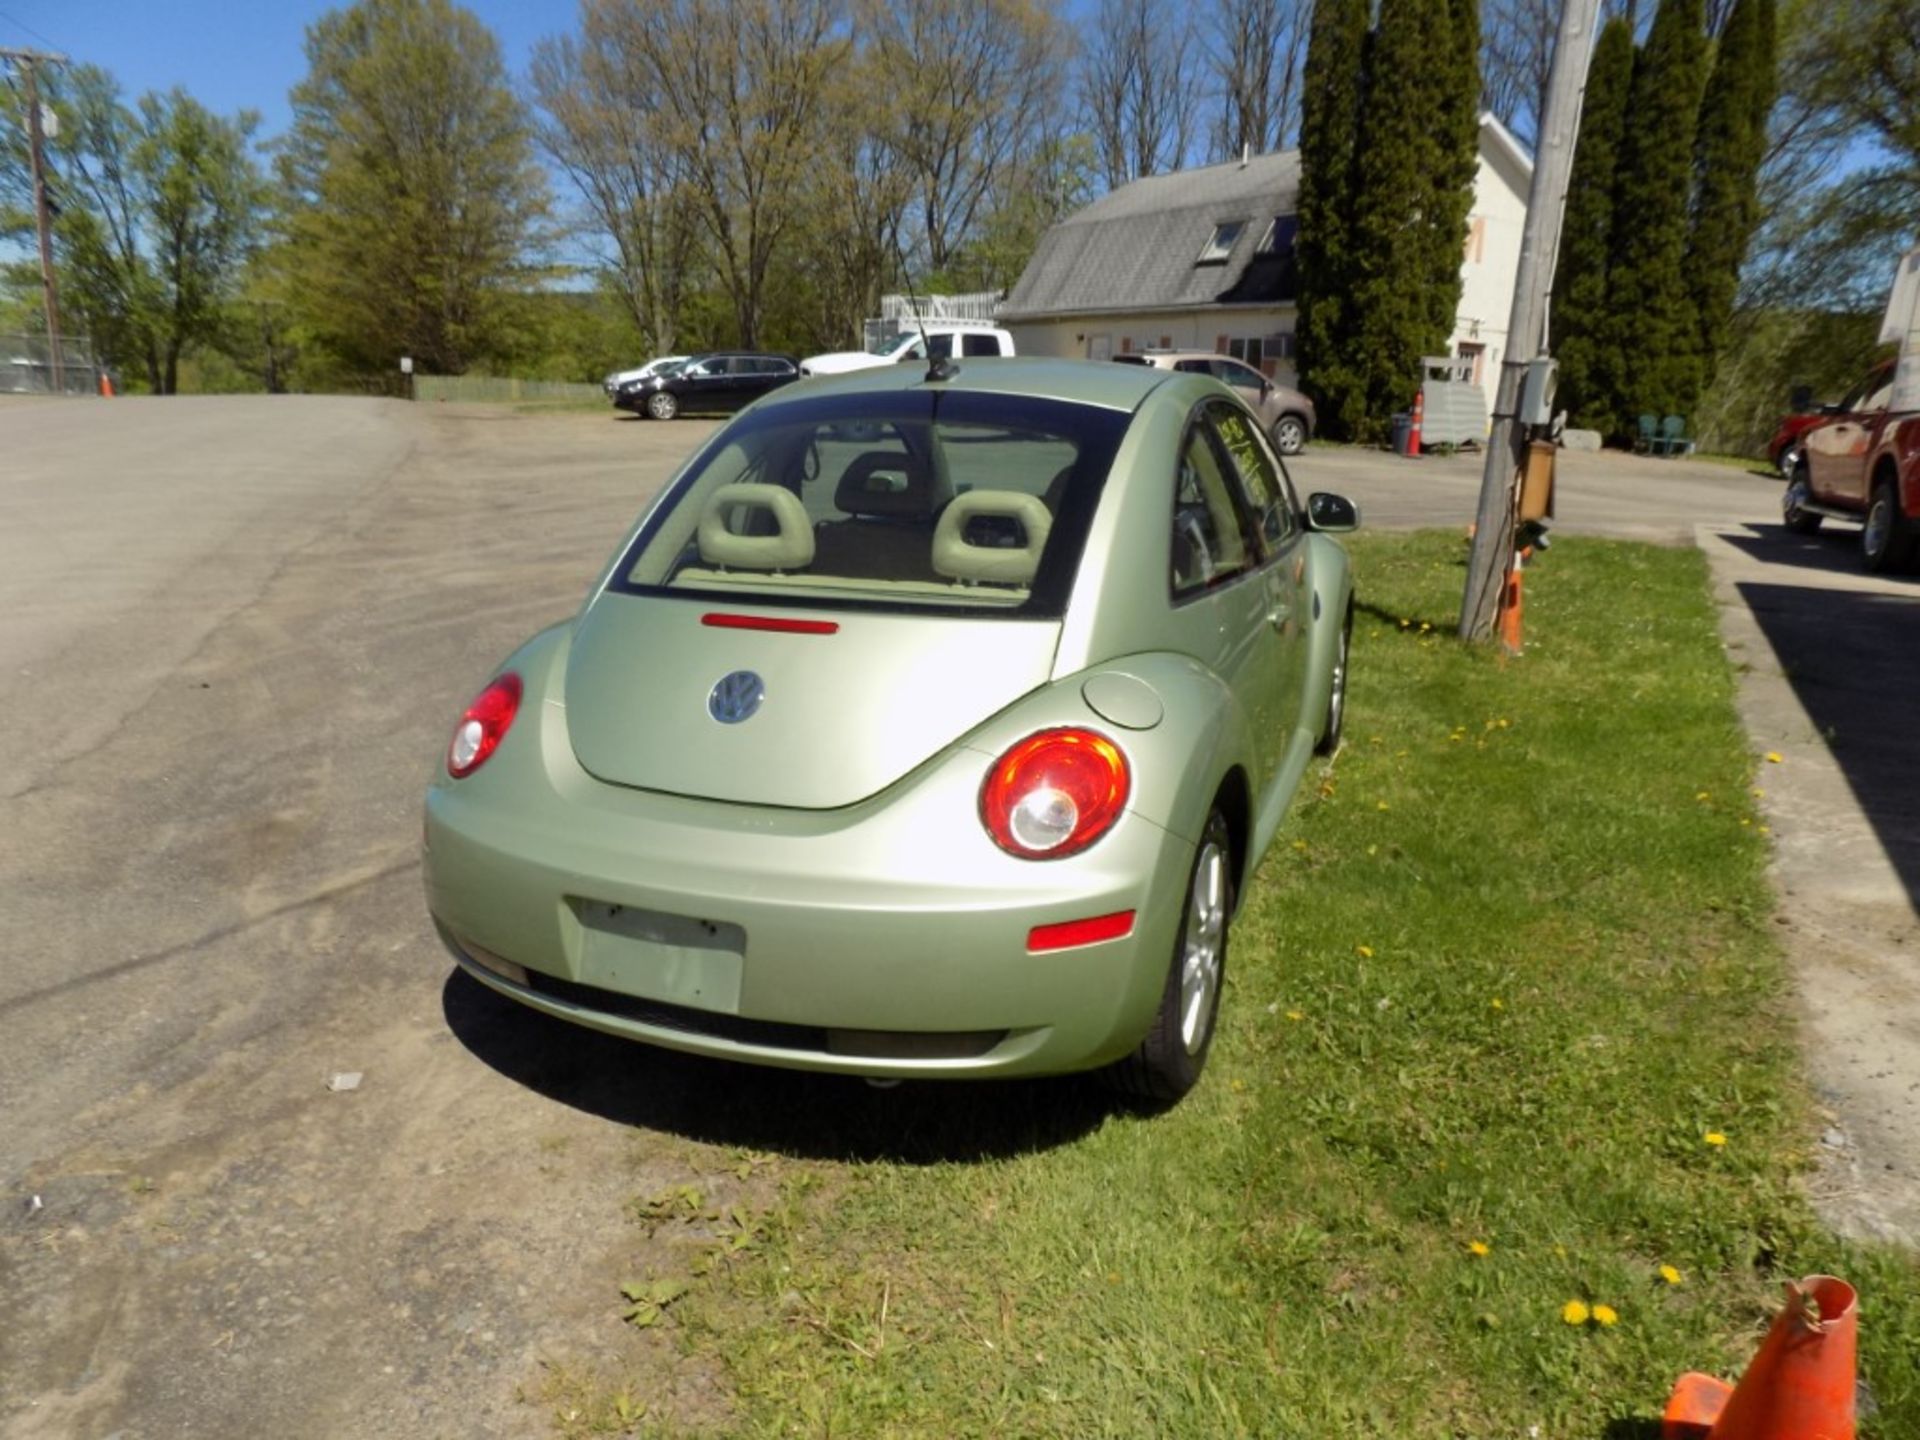 2009 Volkswagen Beetle S, 5-Speed Man, Leather, Sunroof, Green, 130,114 Mi, Vin# 3VWRG31C39M503848 - - Image 3 of 4